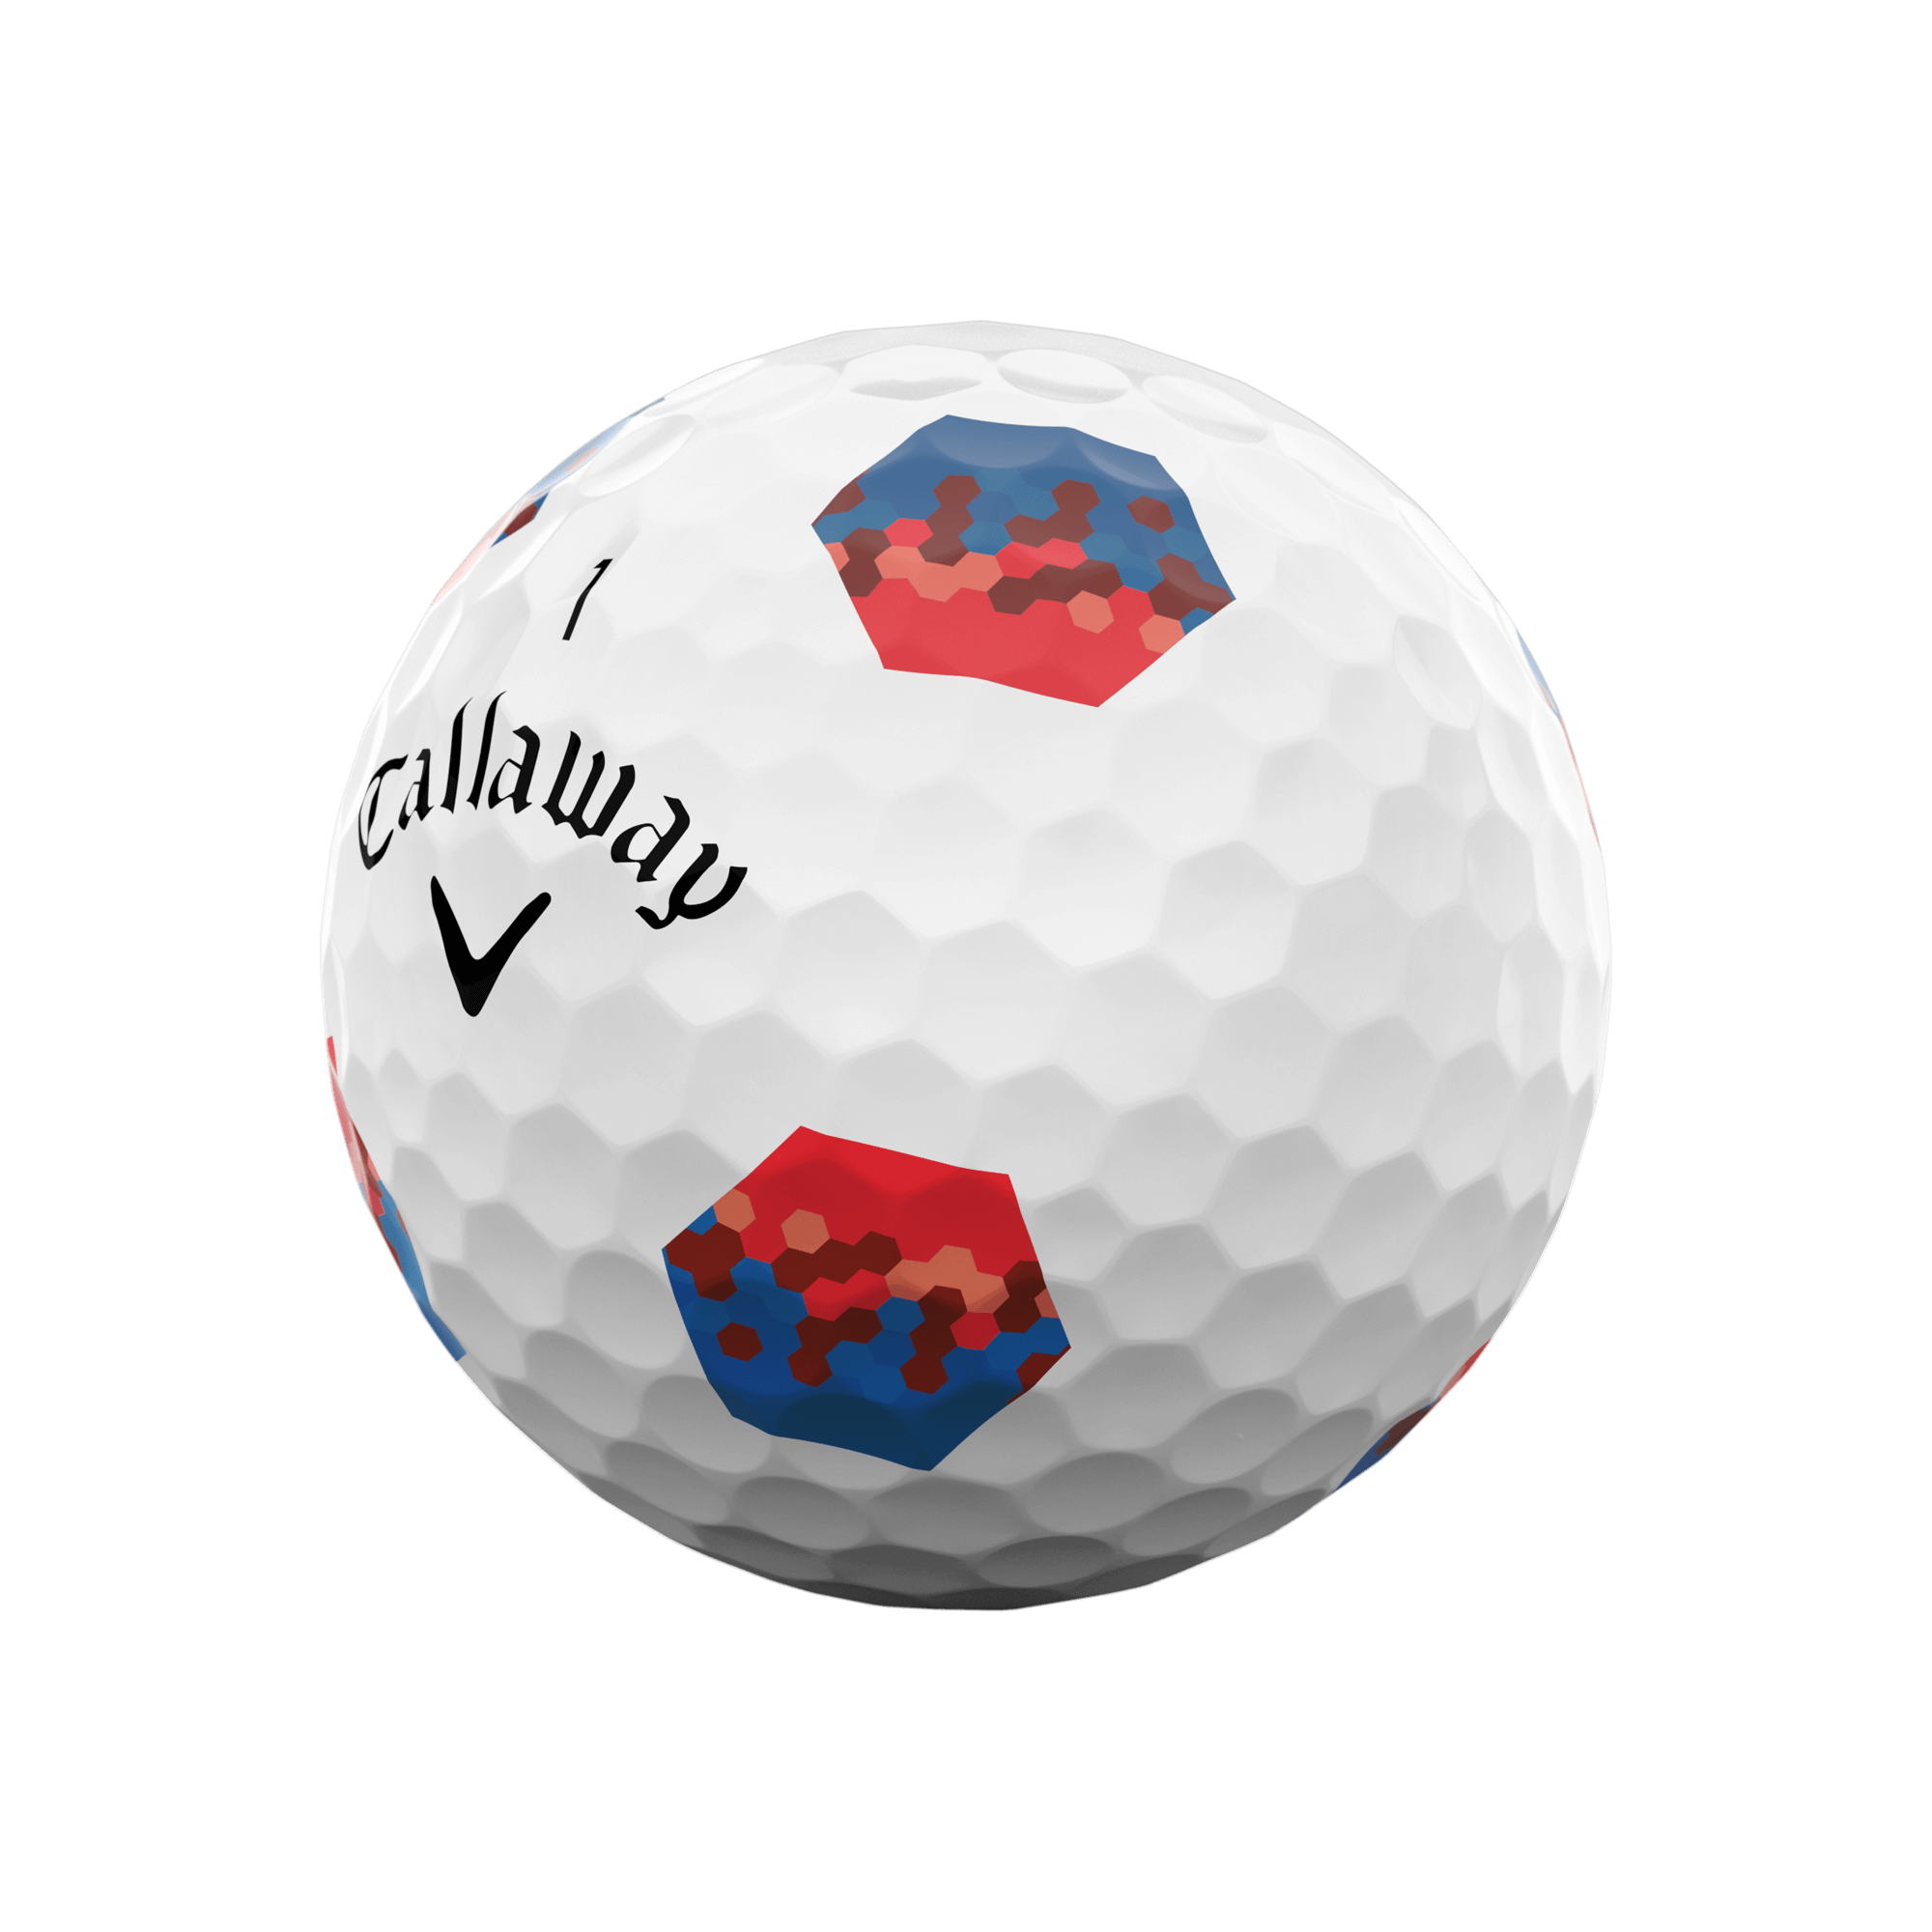 Callaway 2024 Chrome Soft TruTrack Golf Balls